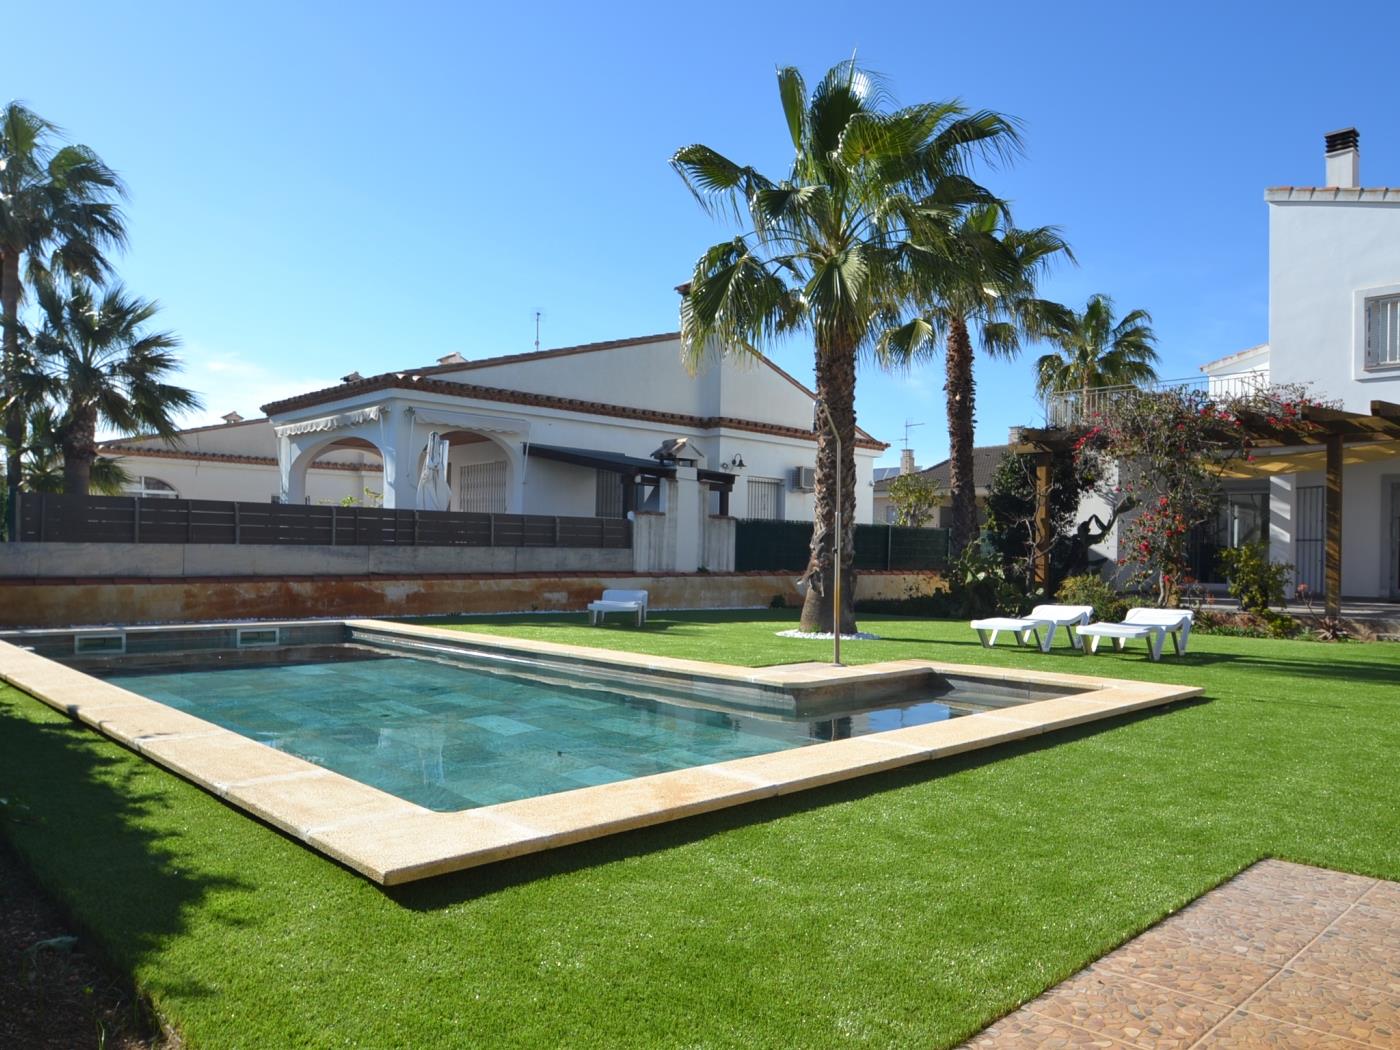 Casa Gallo avec la piscine privée à Riumar Deltebre